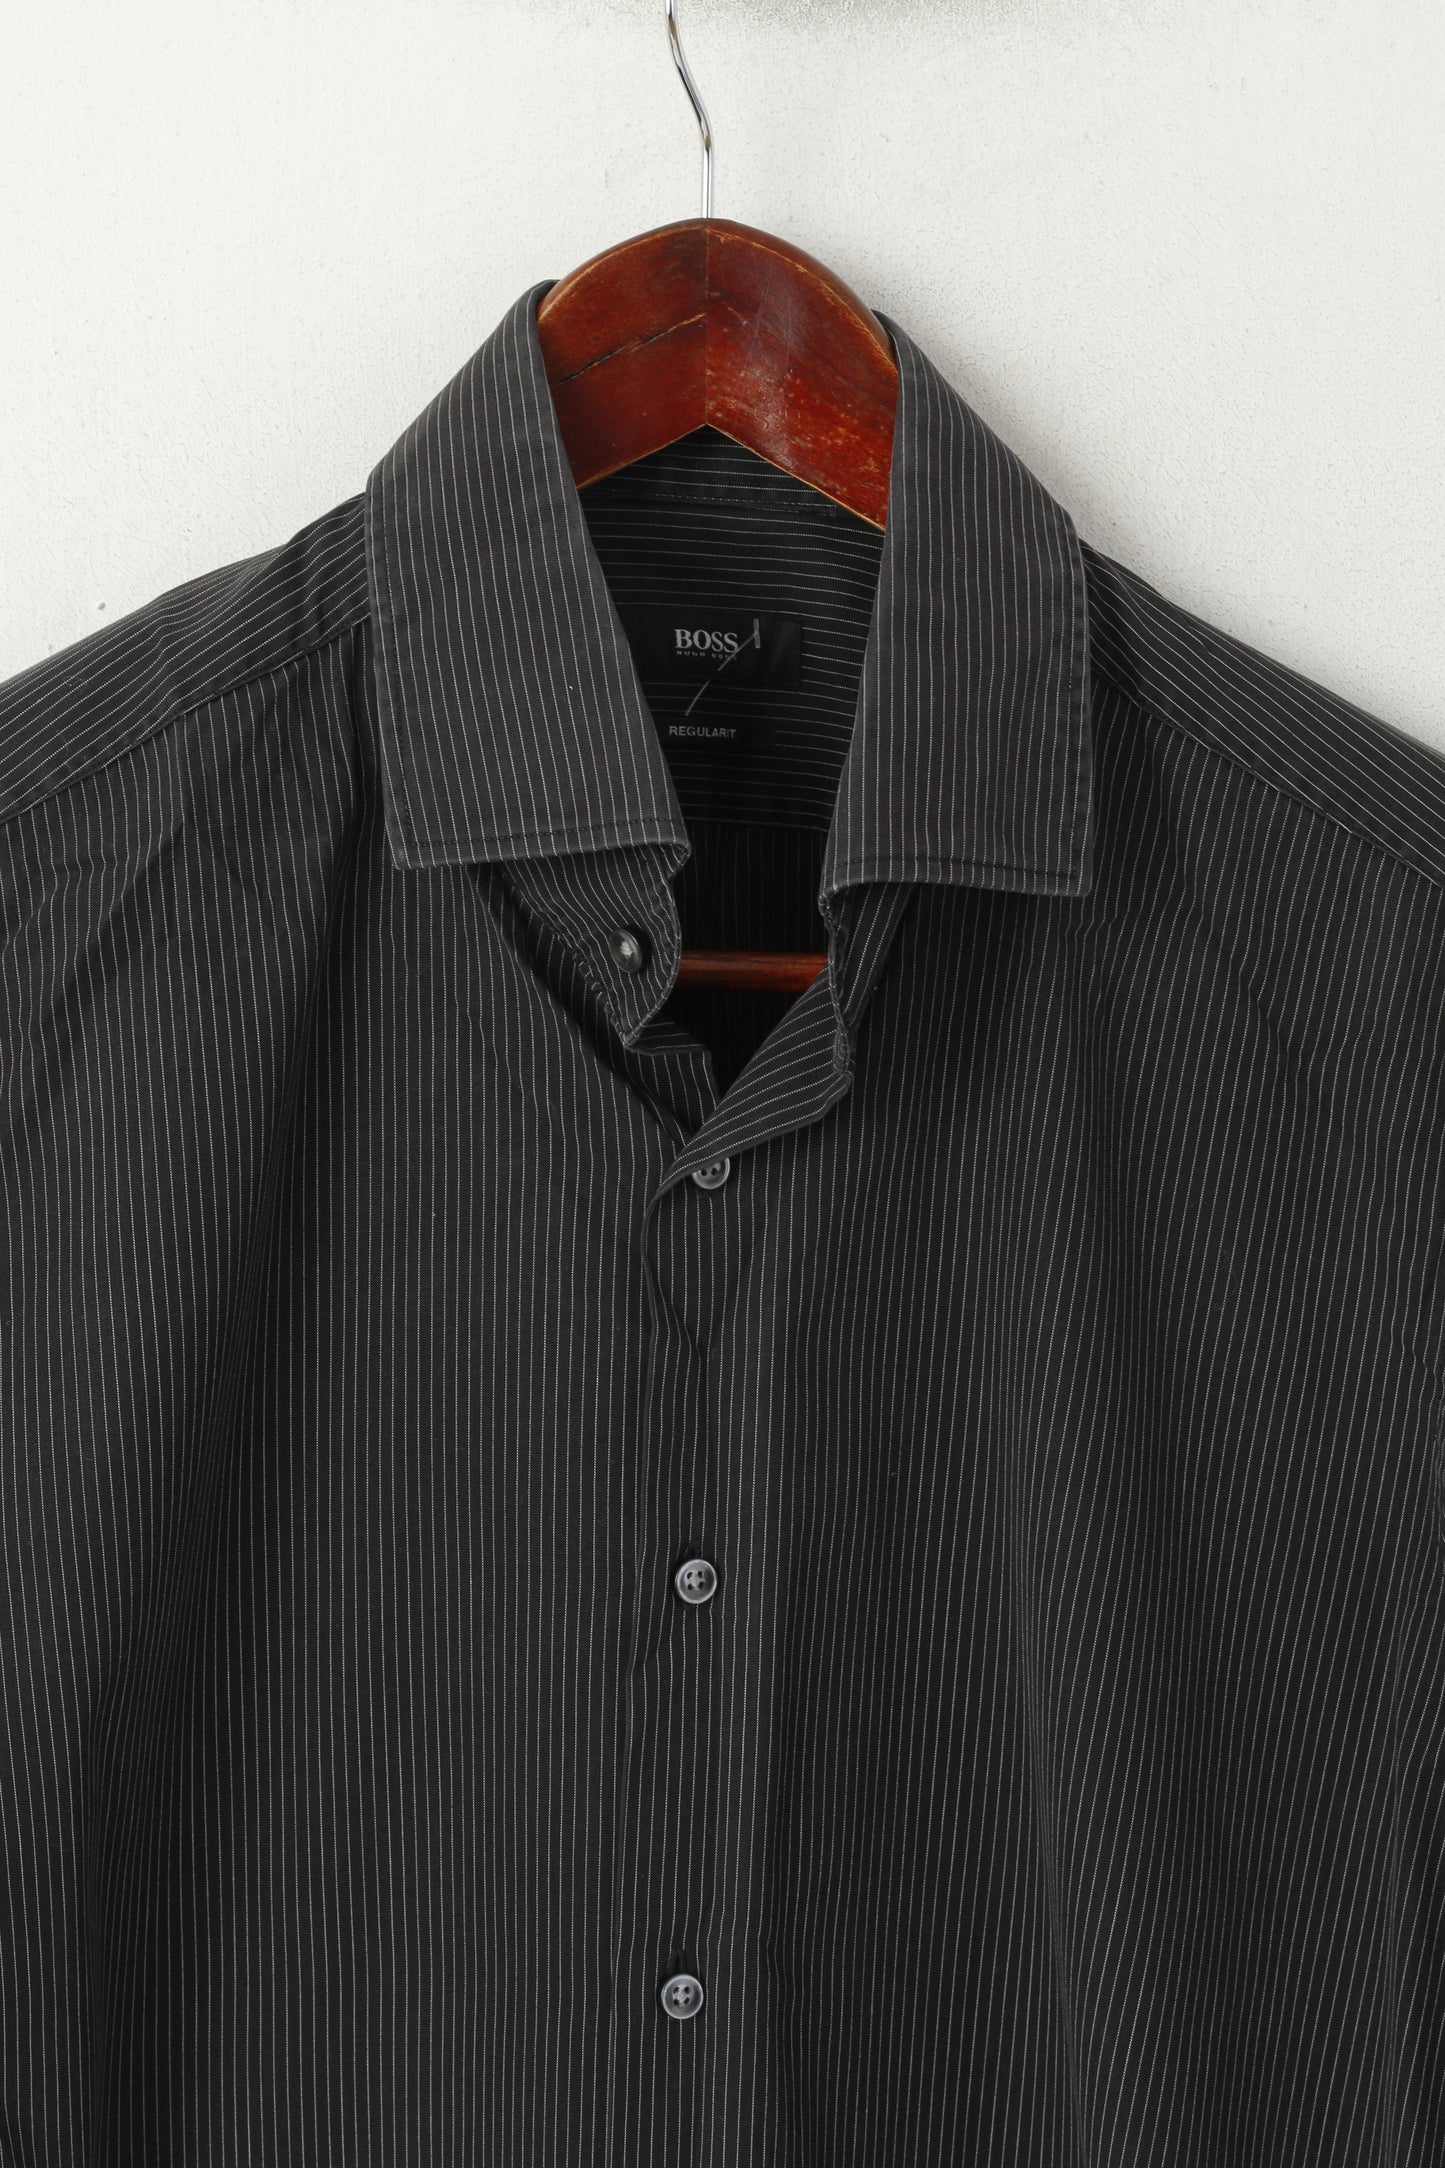 Hugo Boss Men S 40 Casual Shirt Black Striped Cotton Regular Fit Long Sleeve Top